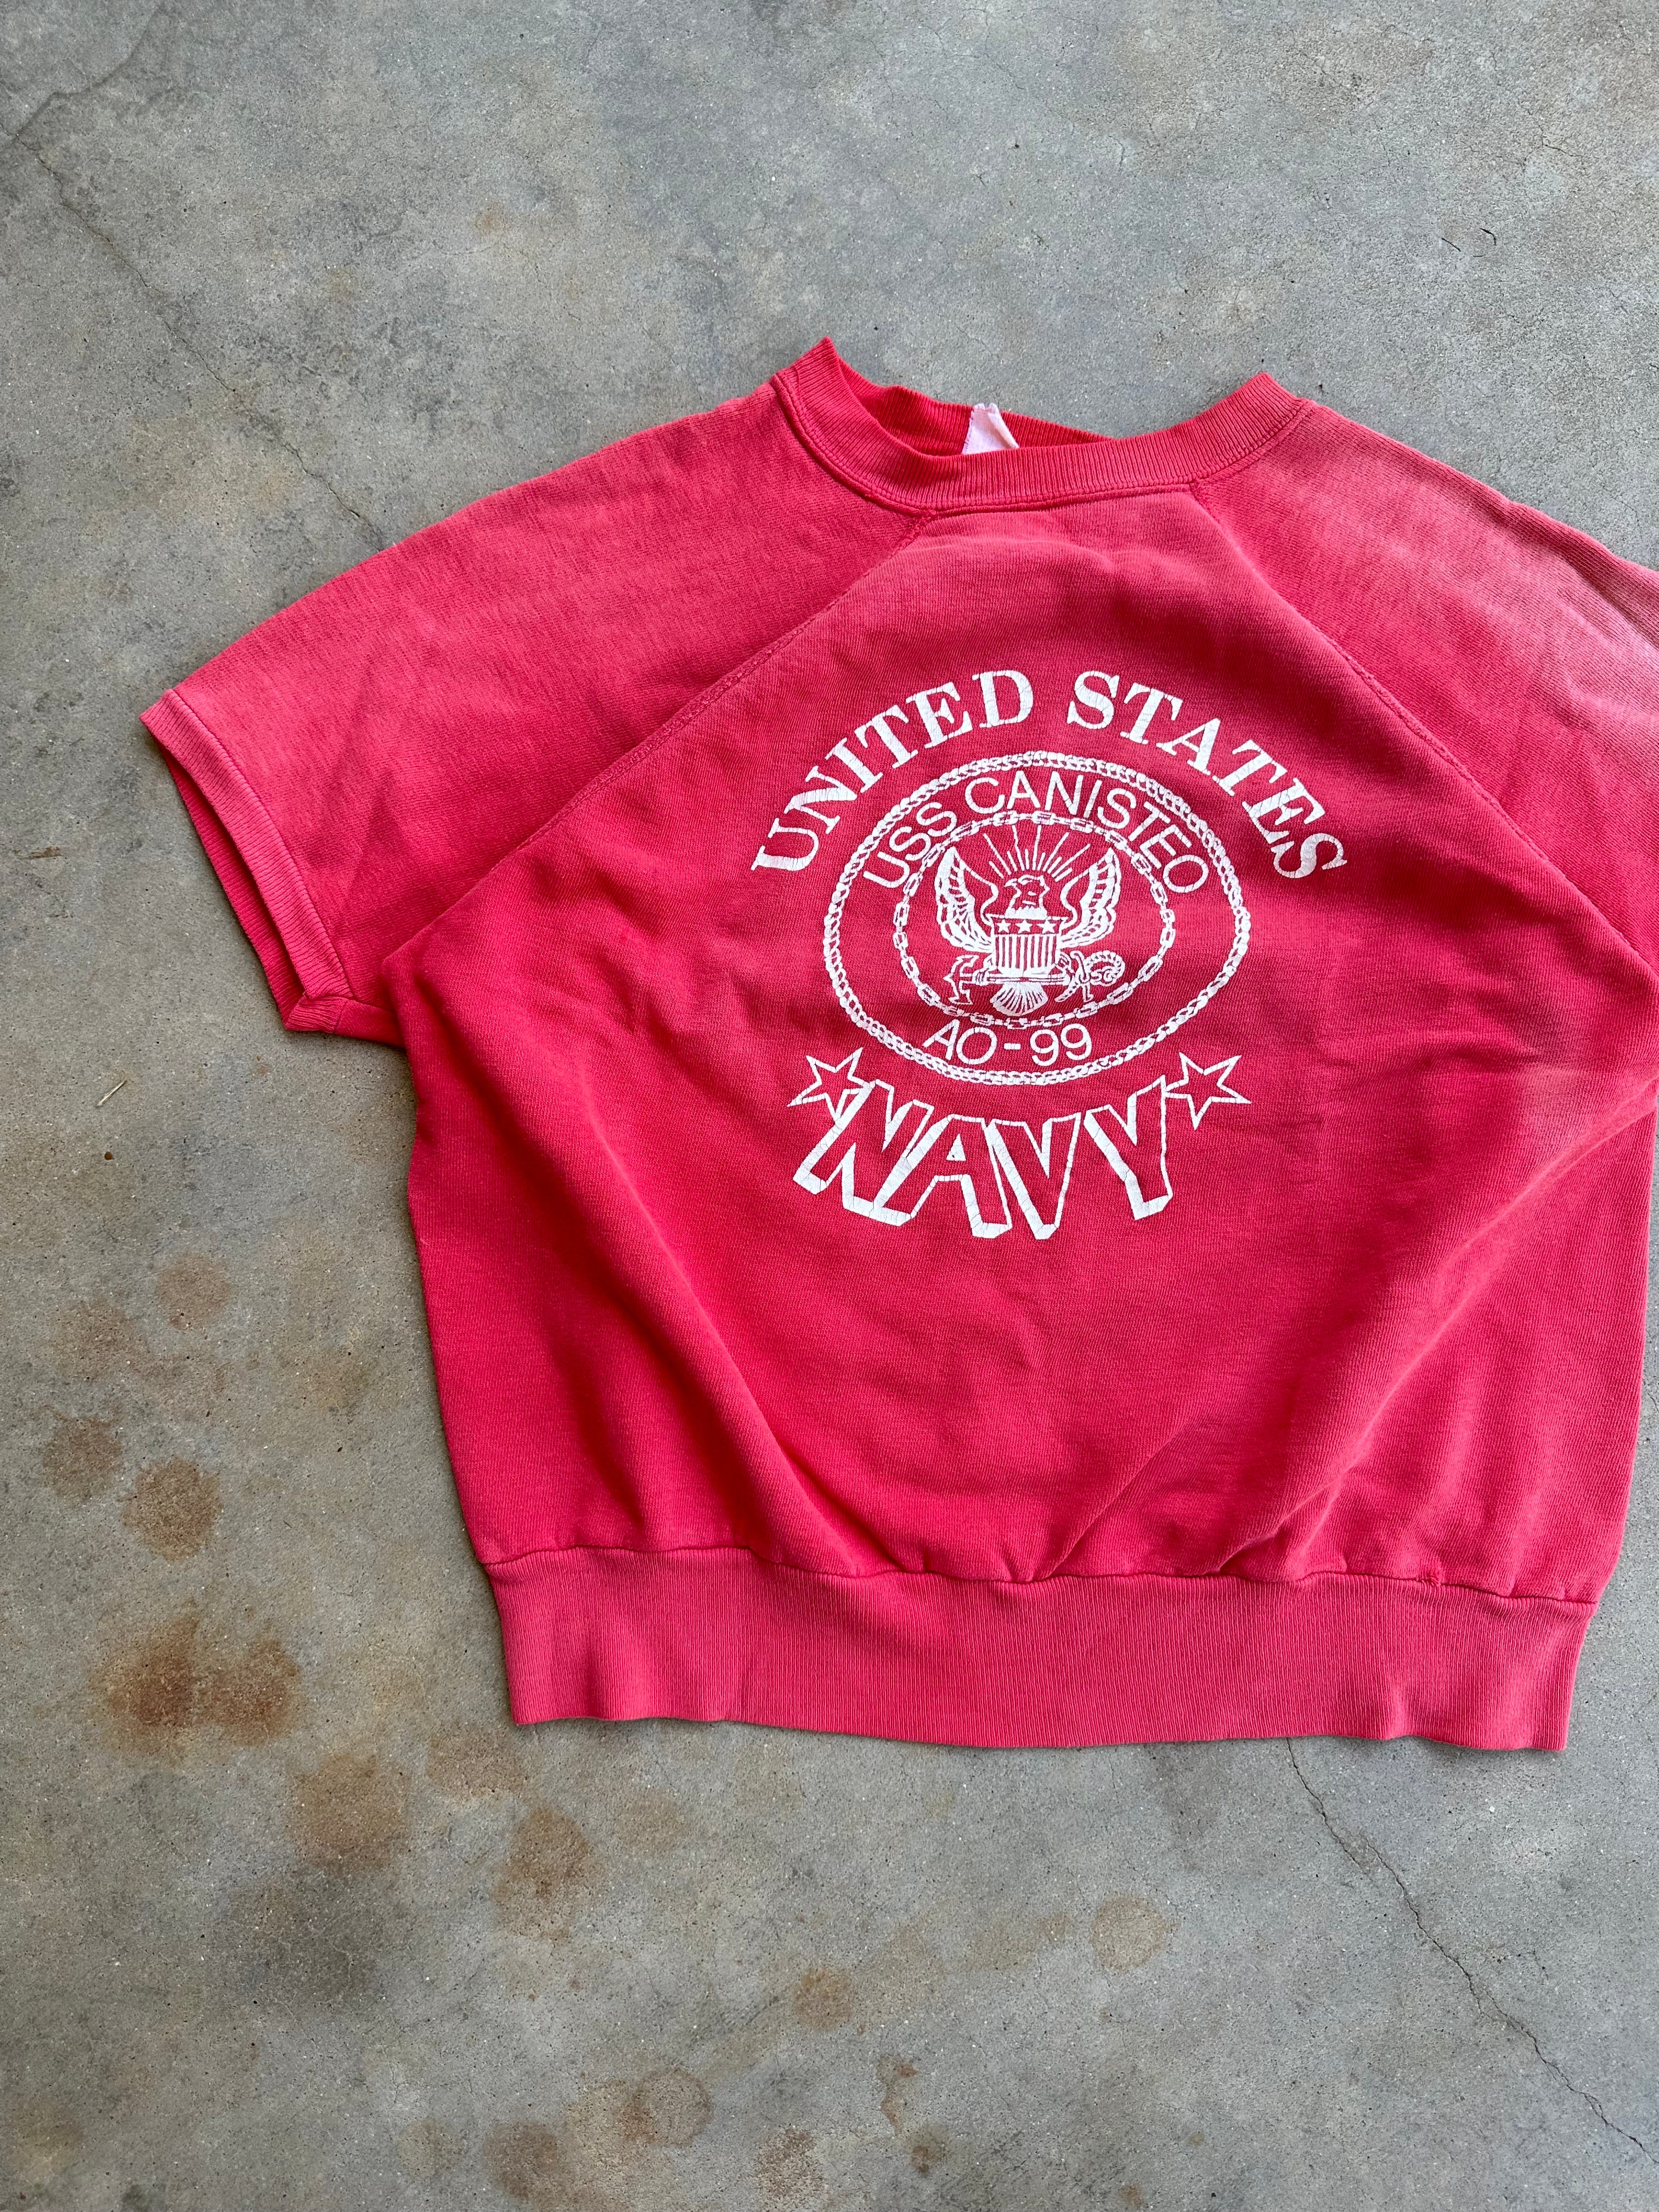 1960s United States Navy Sweatshirt (S/M)